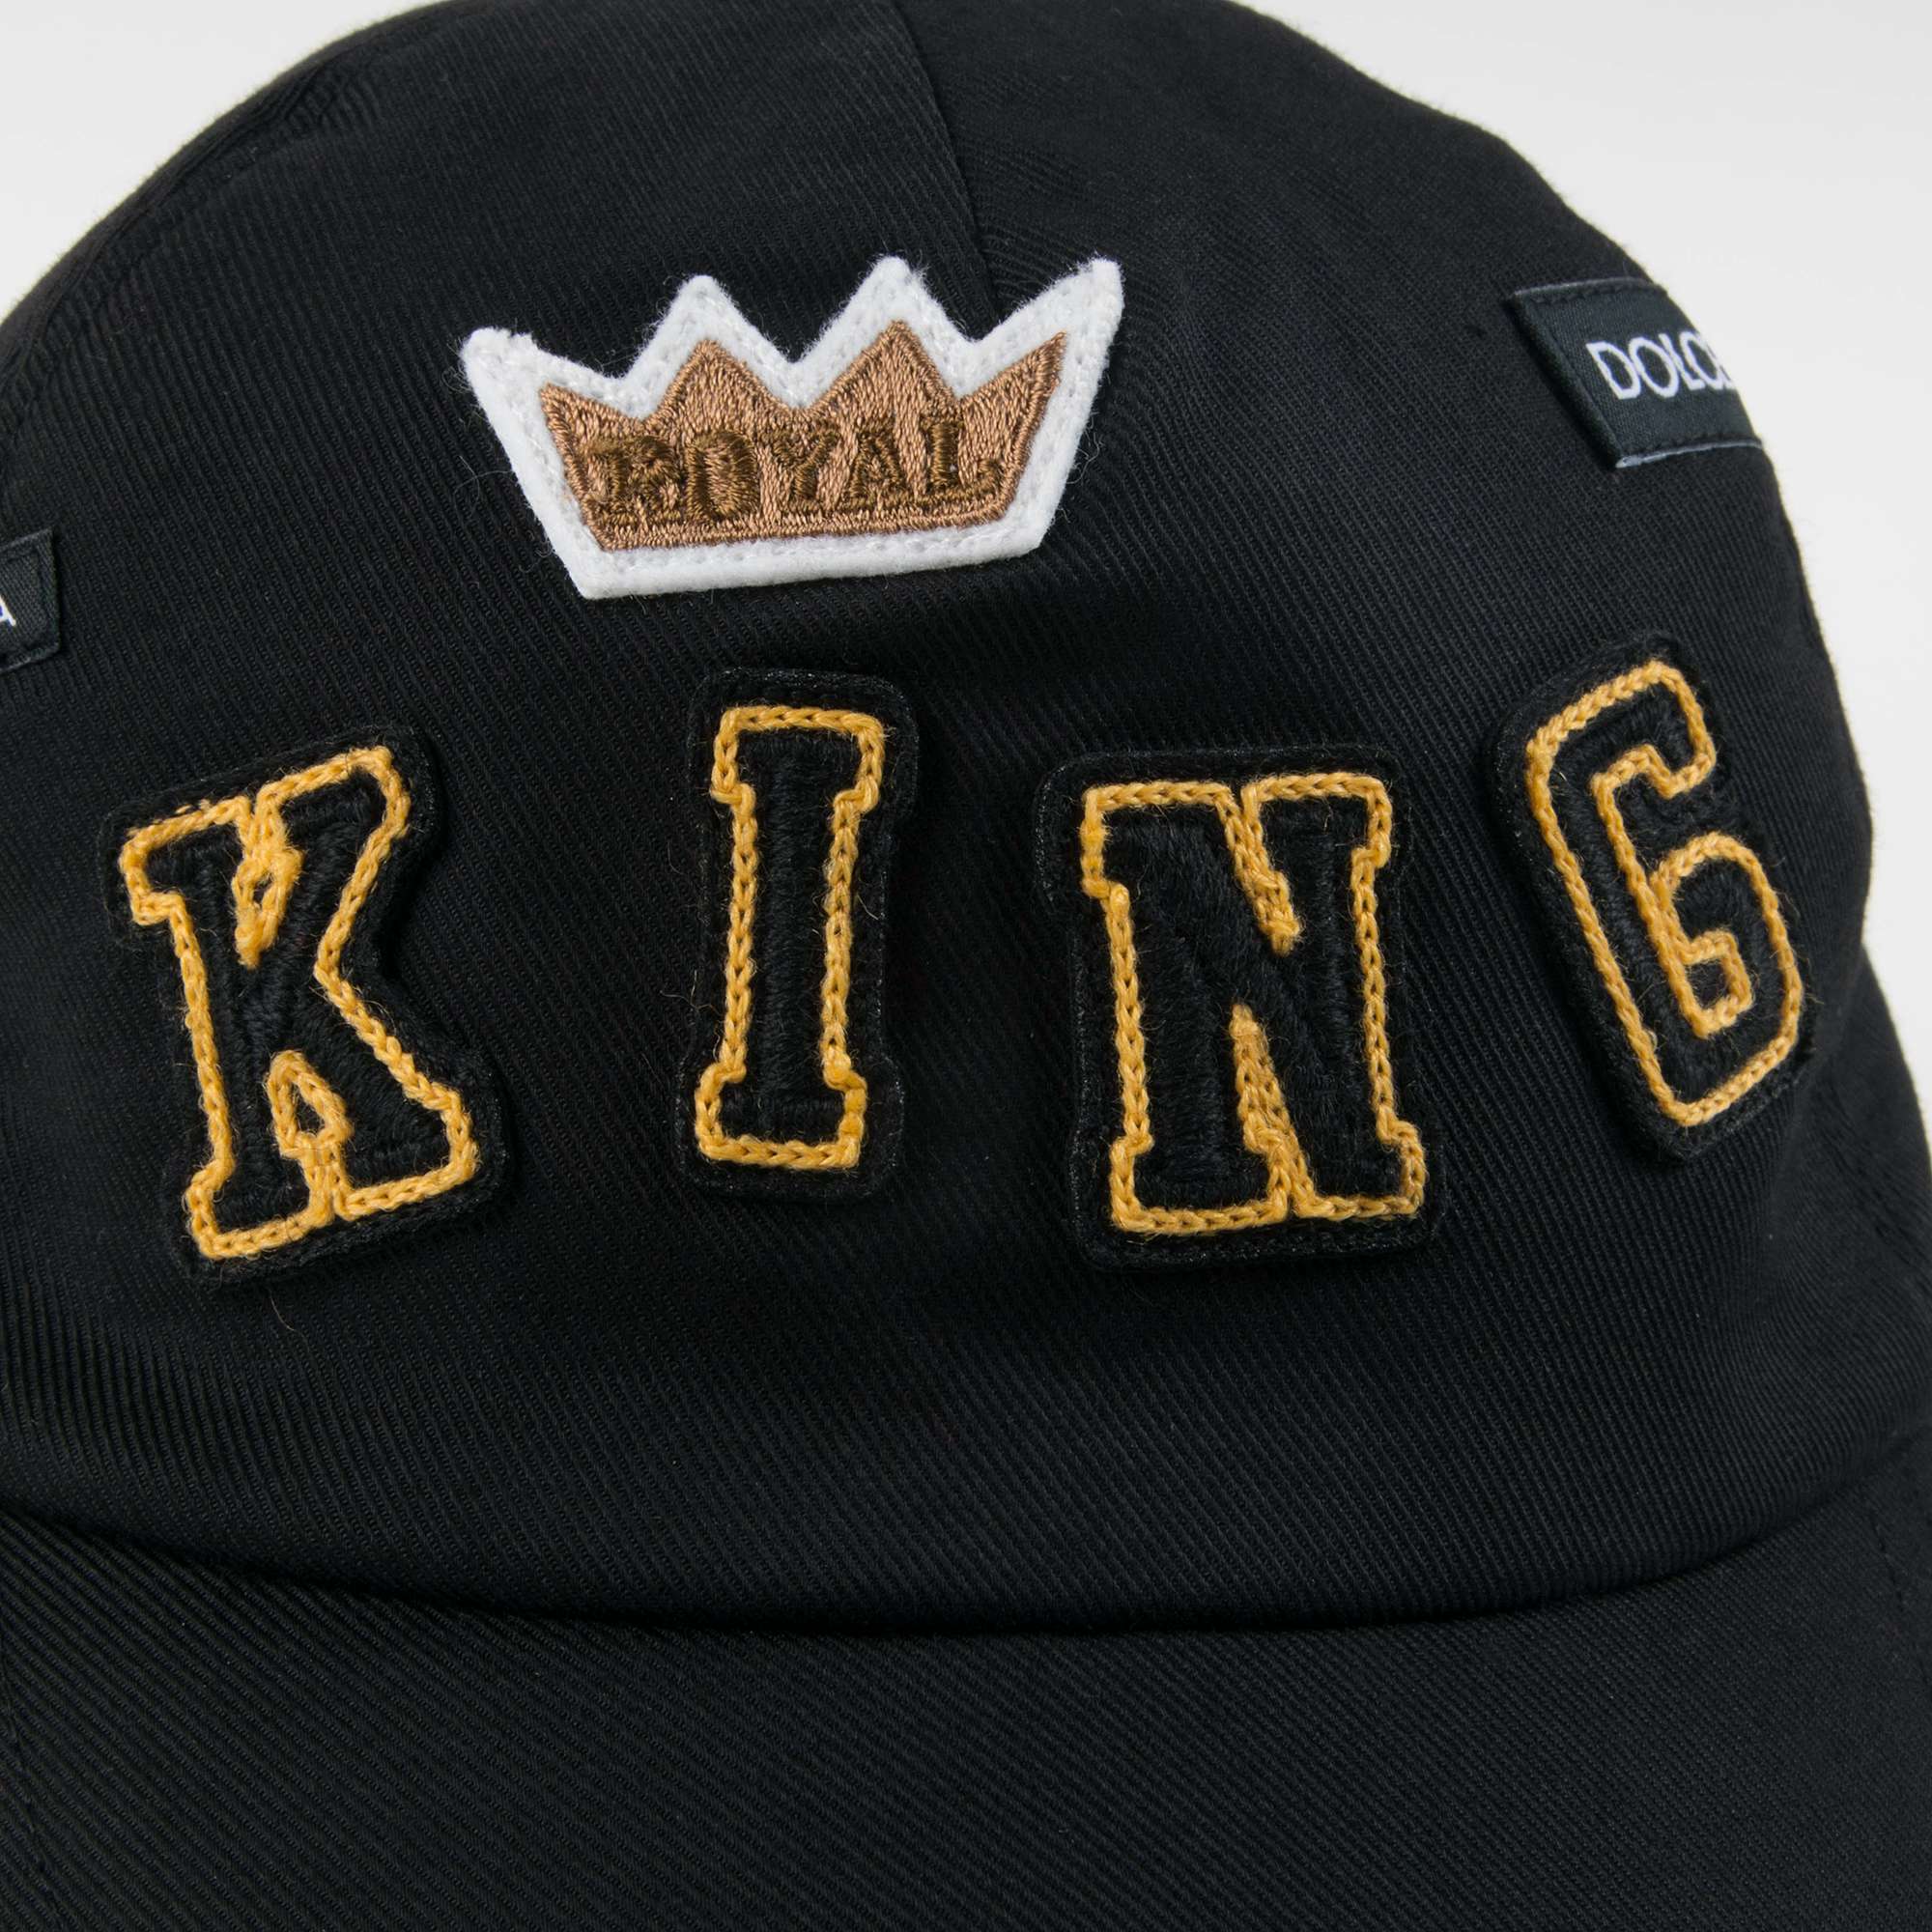 Boys Navy Blue "King" Hat